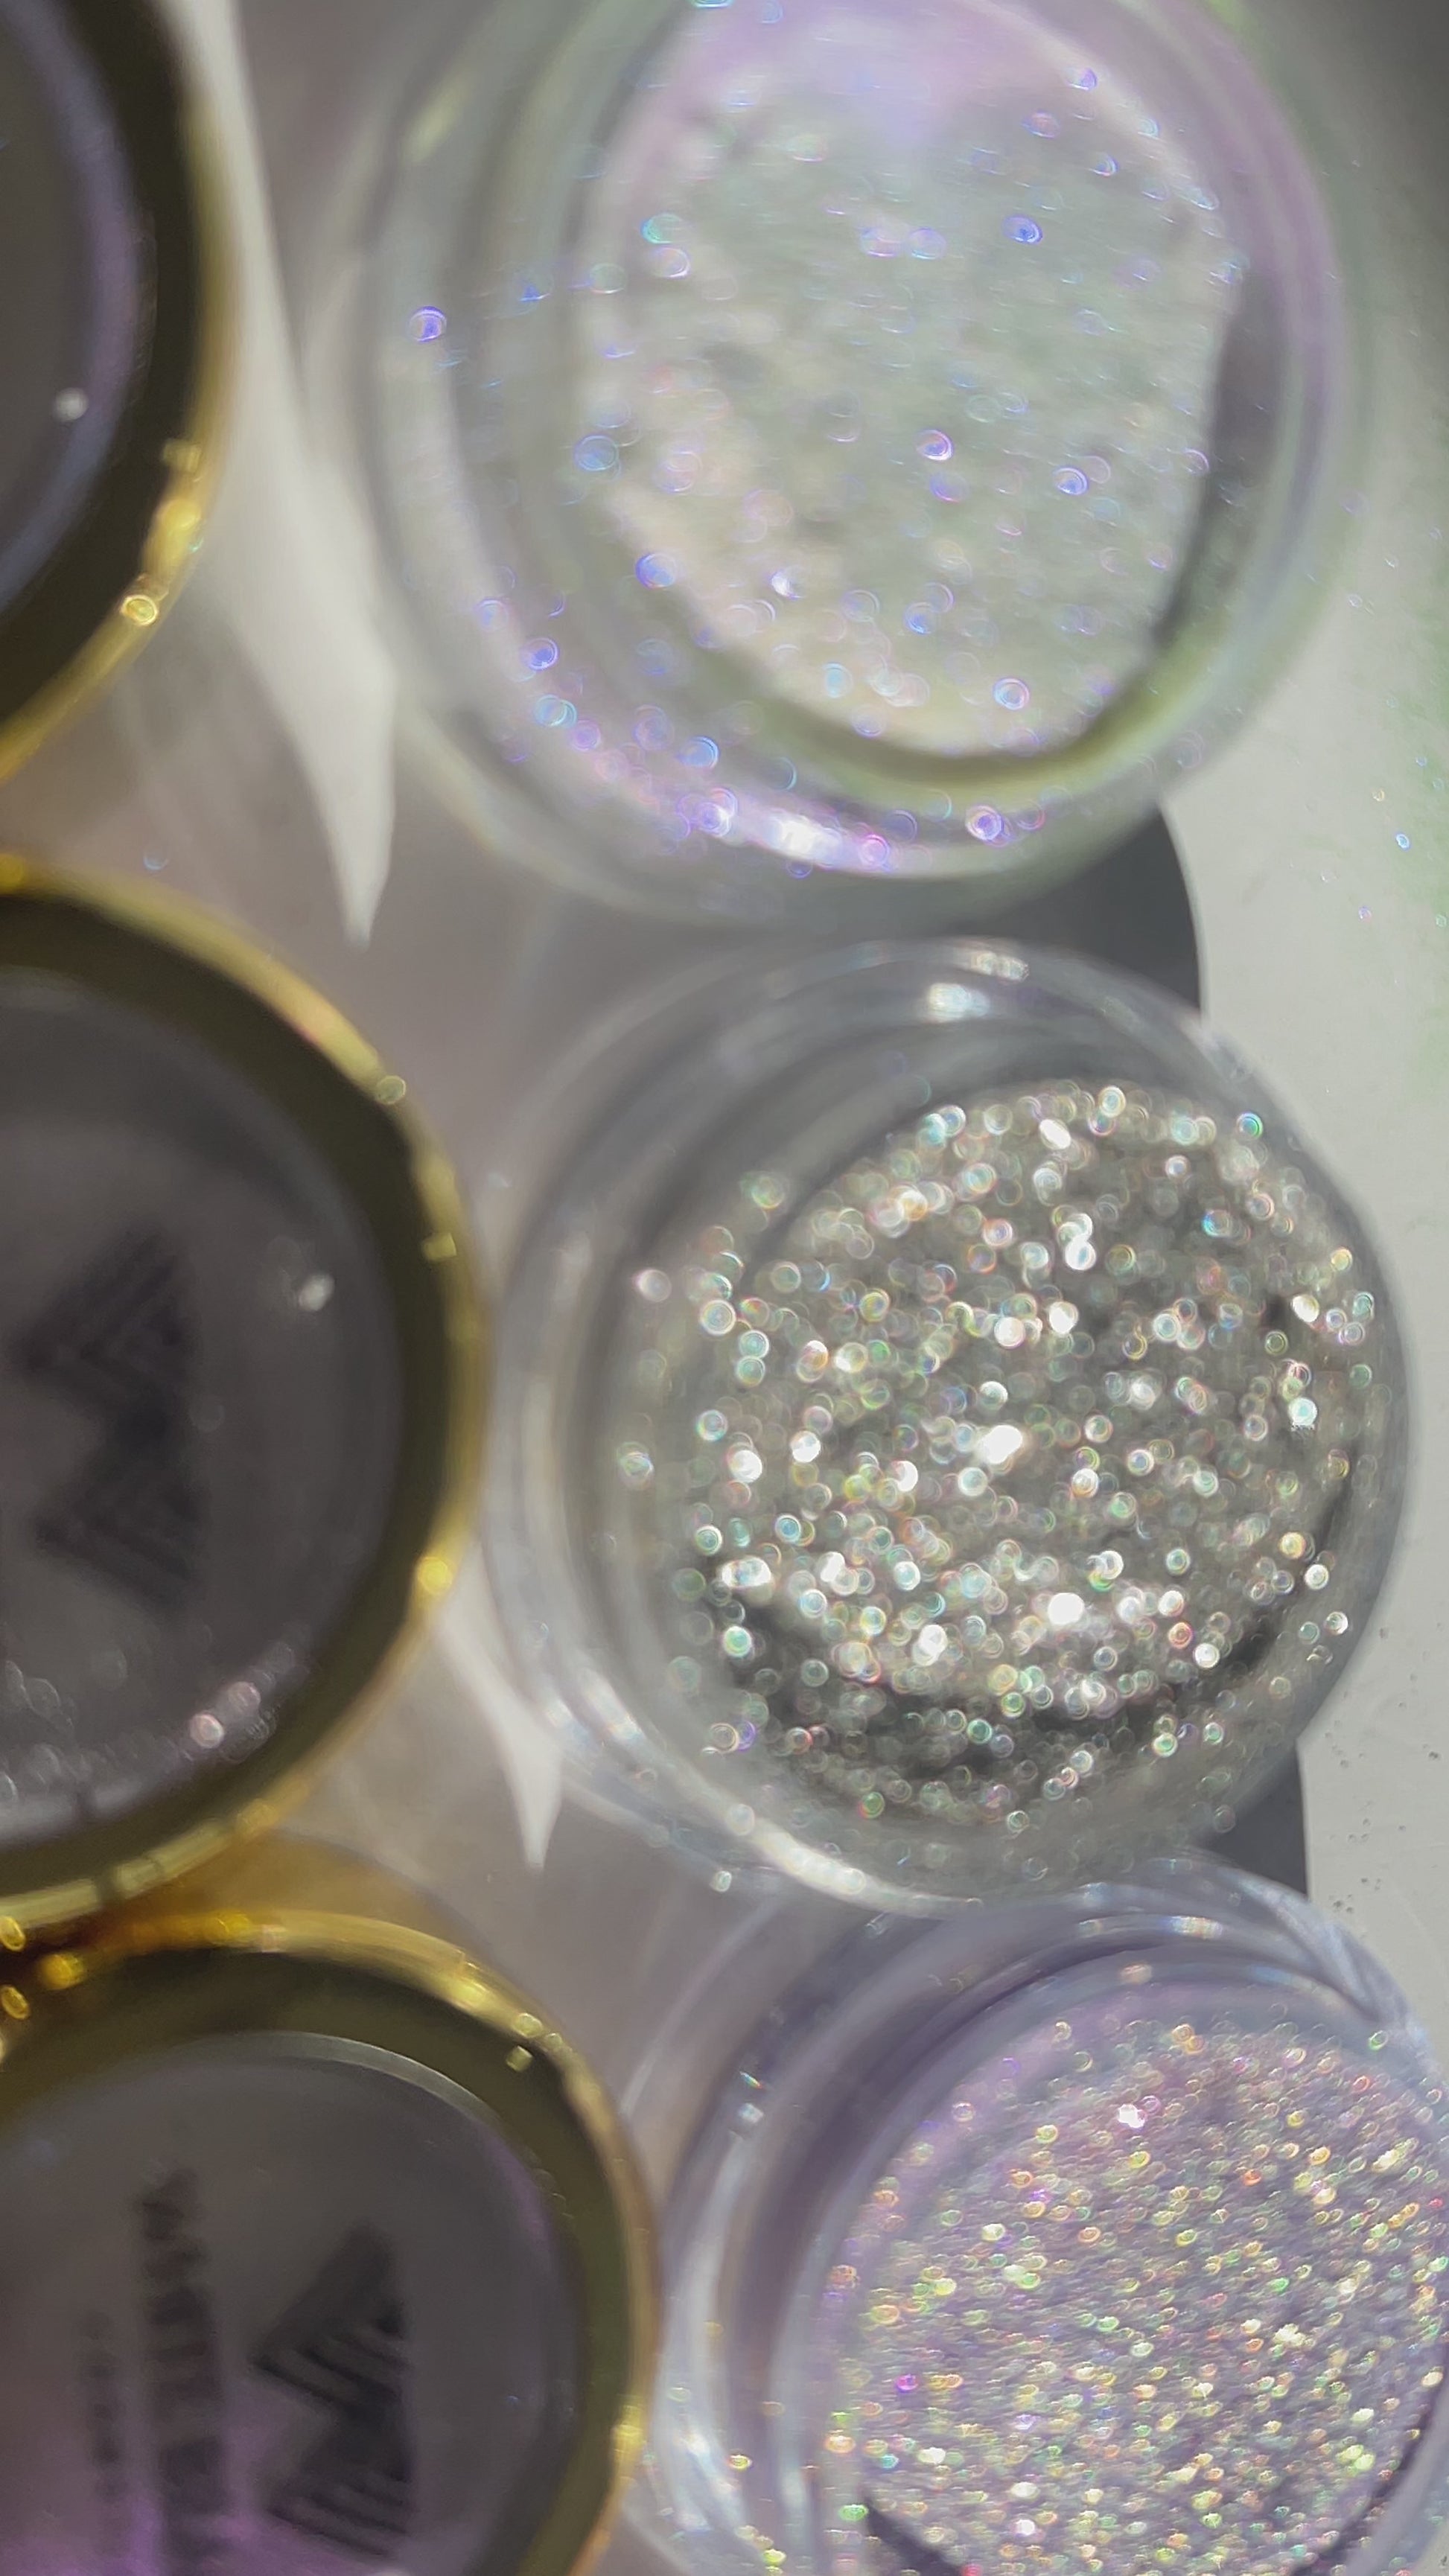 Diamond Loose Glitter Pigment Collection 7 PCS